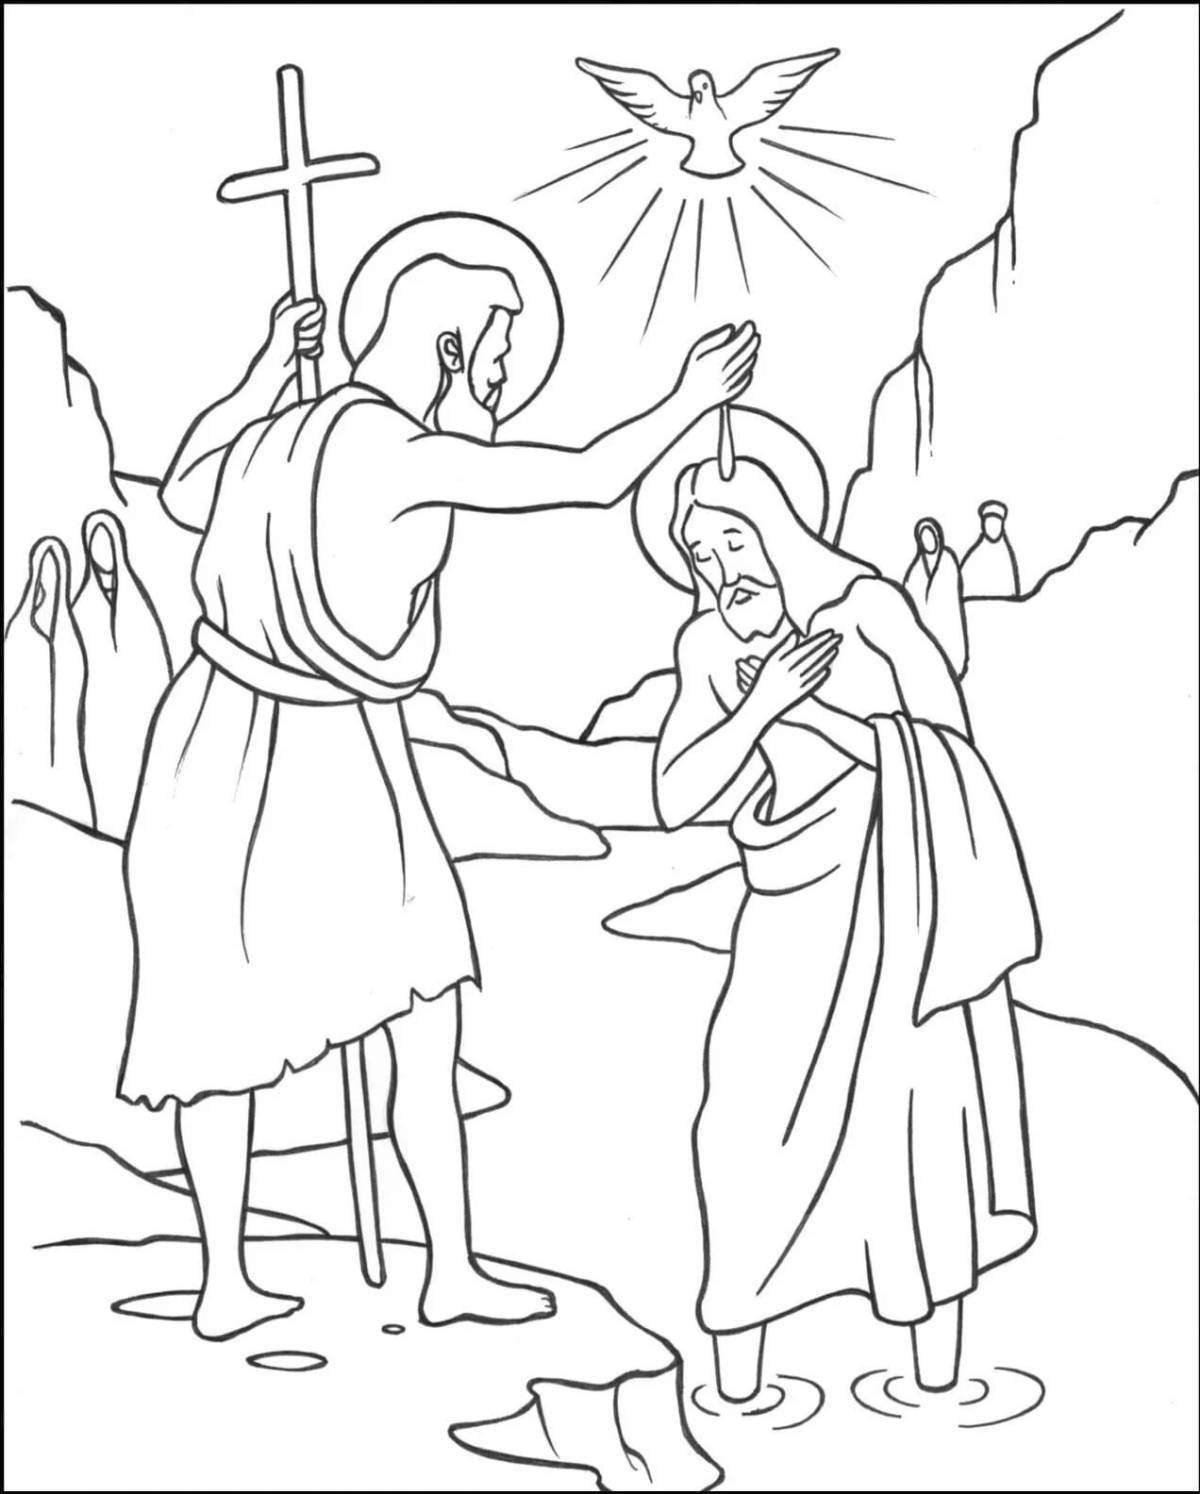 Coloring page joyful baptismal card